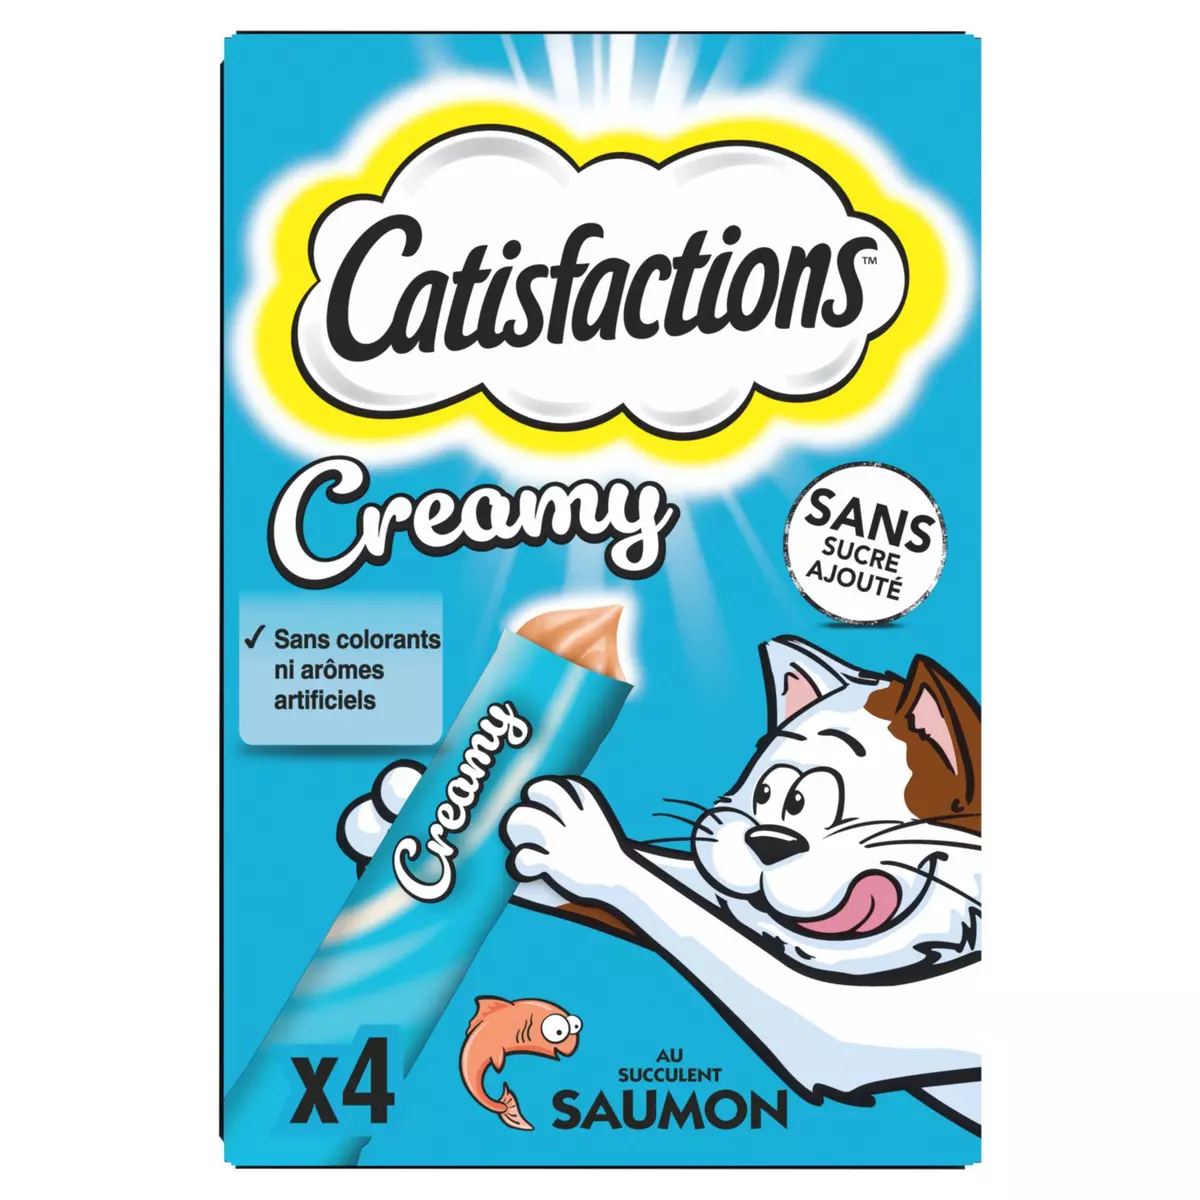 CATISFACTIONS Creamy snack saveur saumon pour chat 4 sachets 4x10g